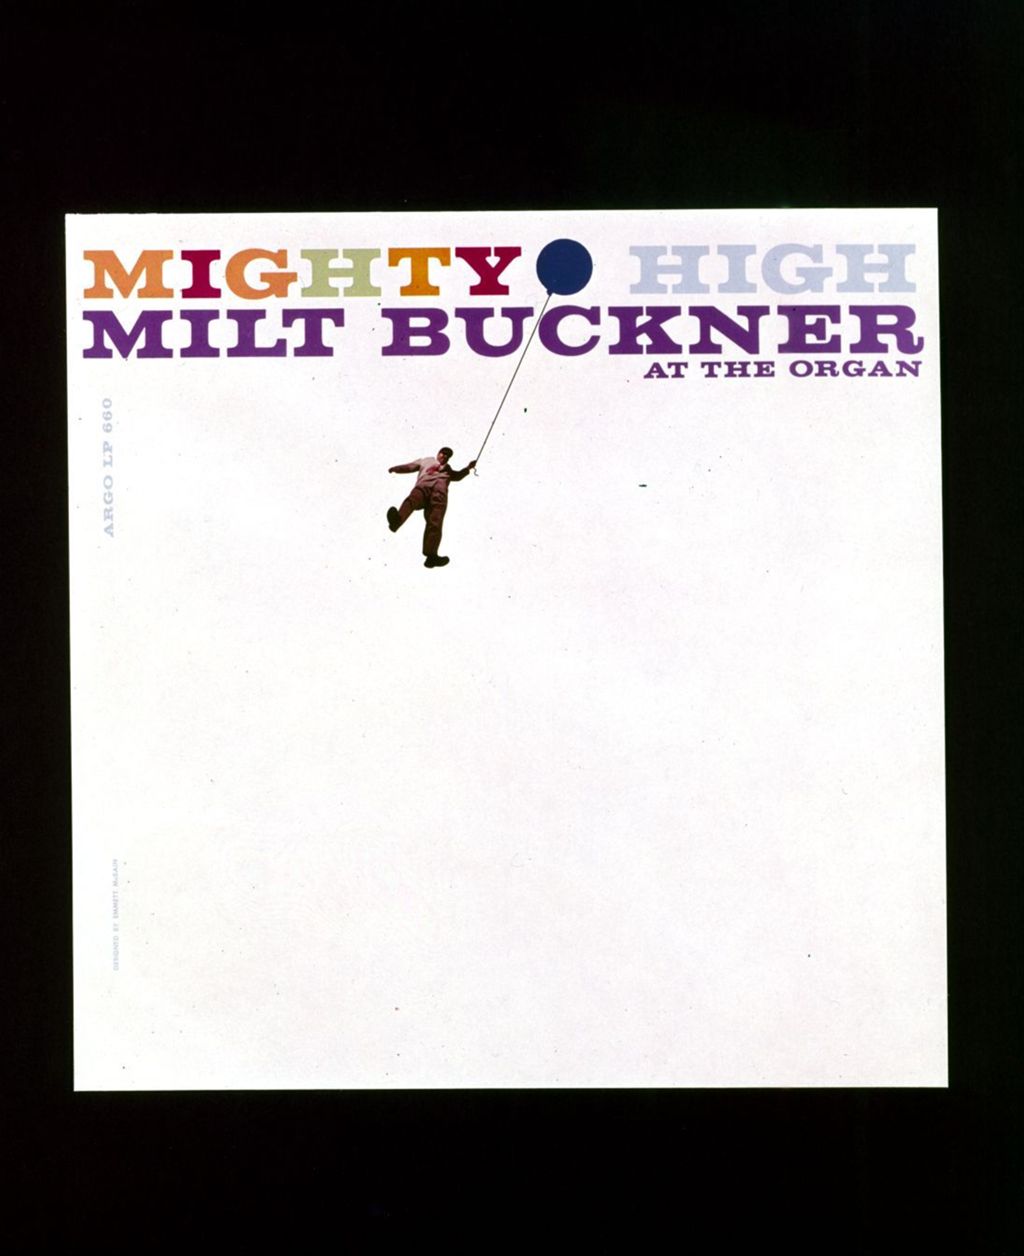 Mighty High, Milt Buckner album cover